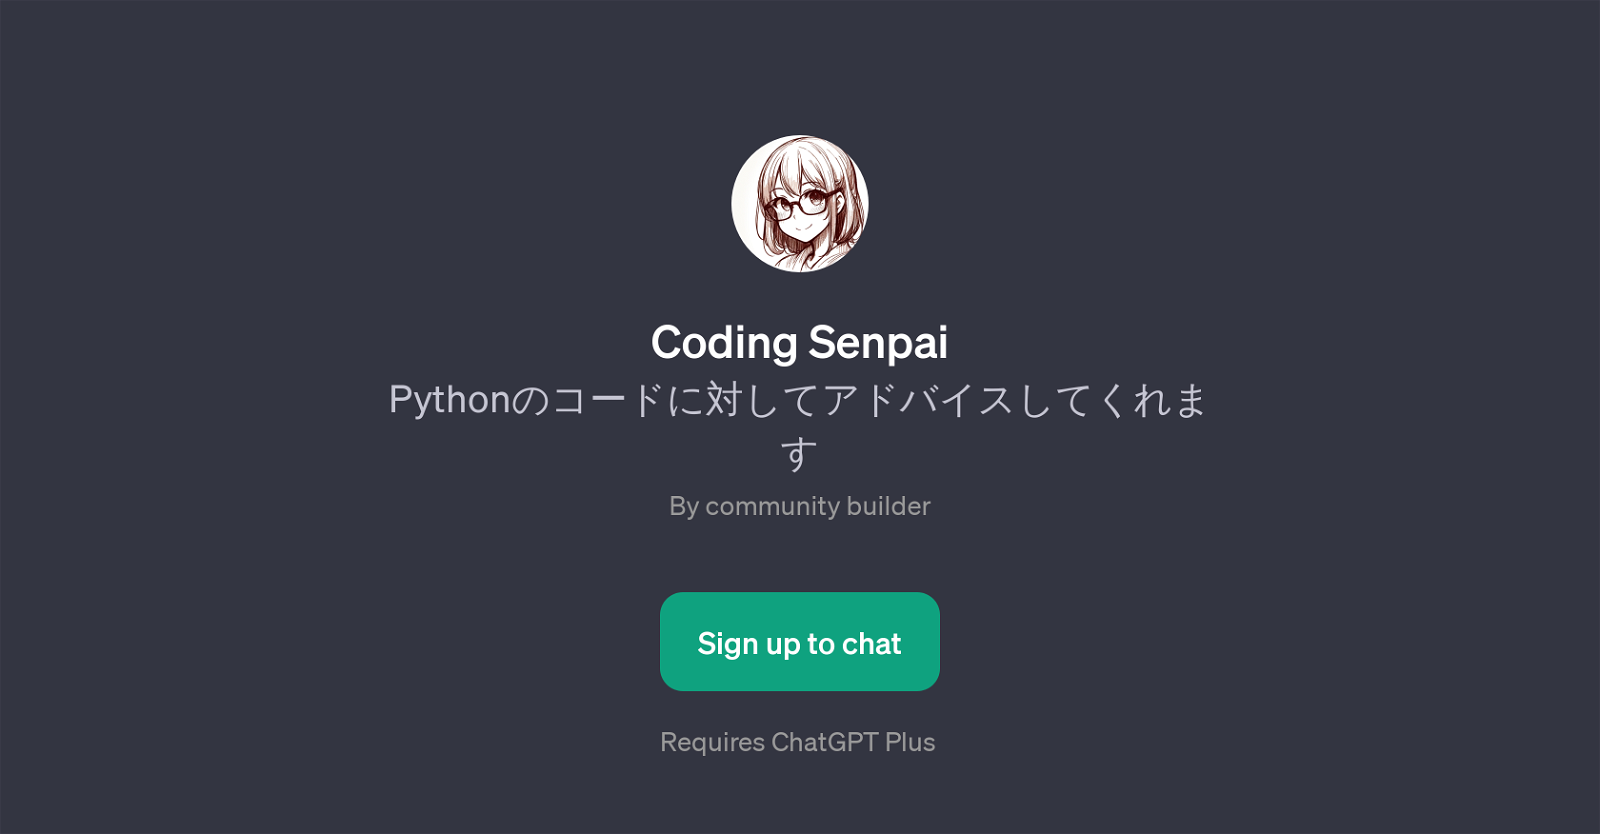 Coding Senpai website